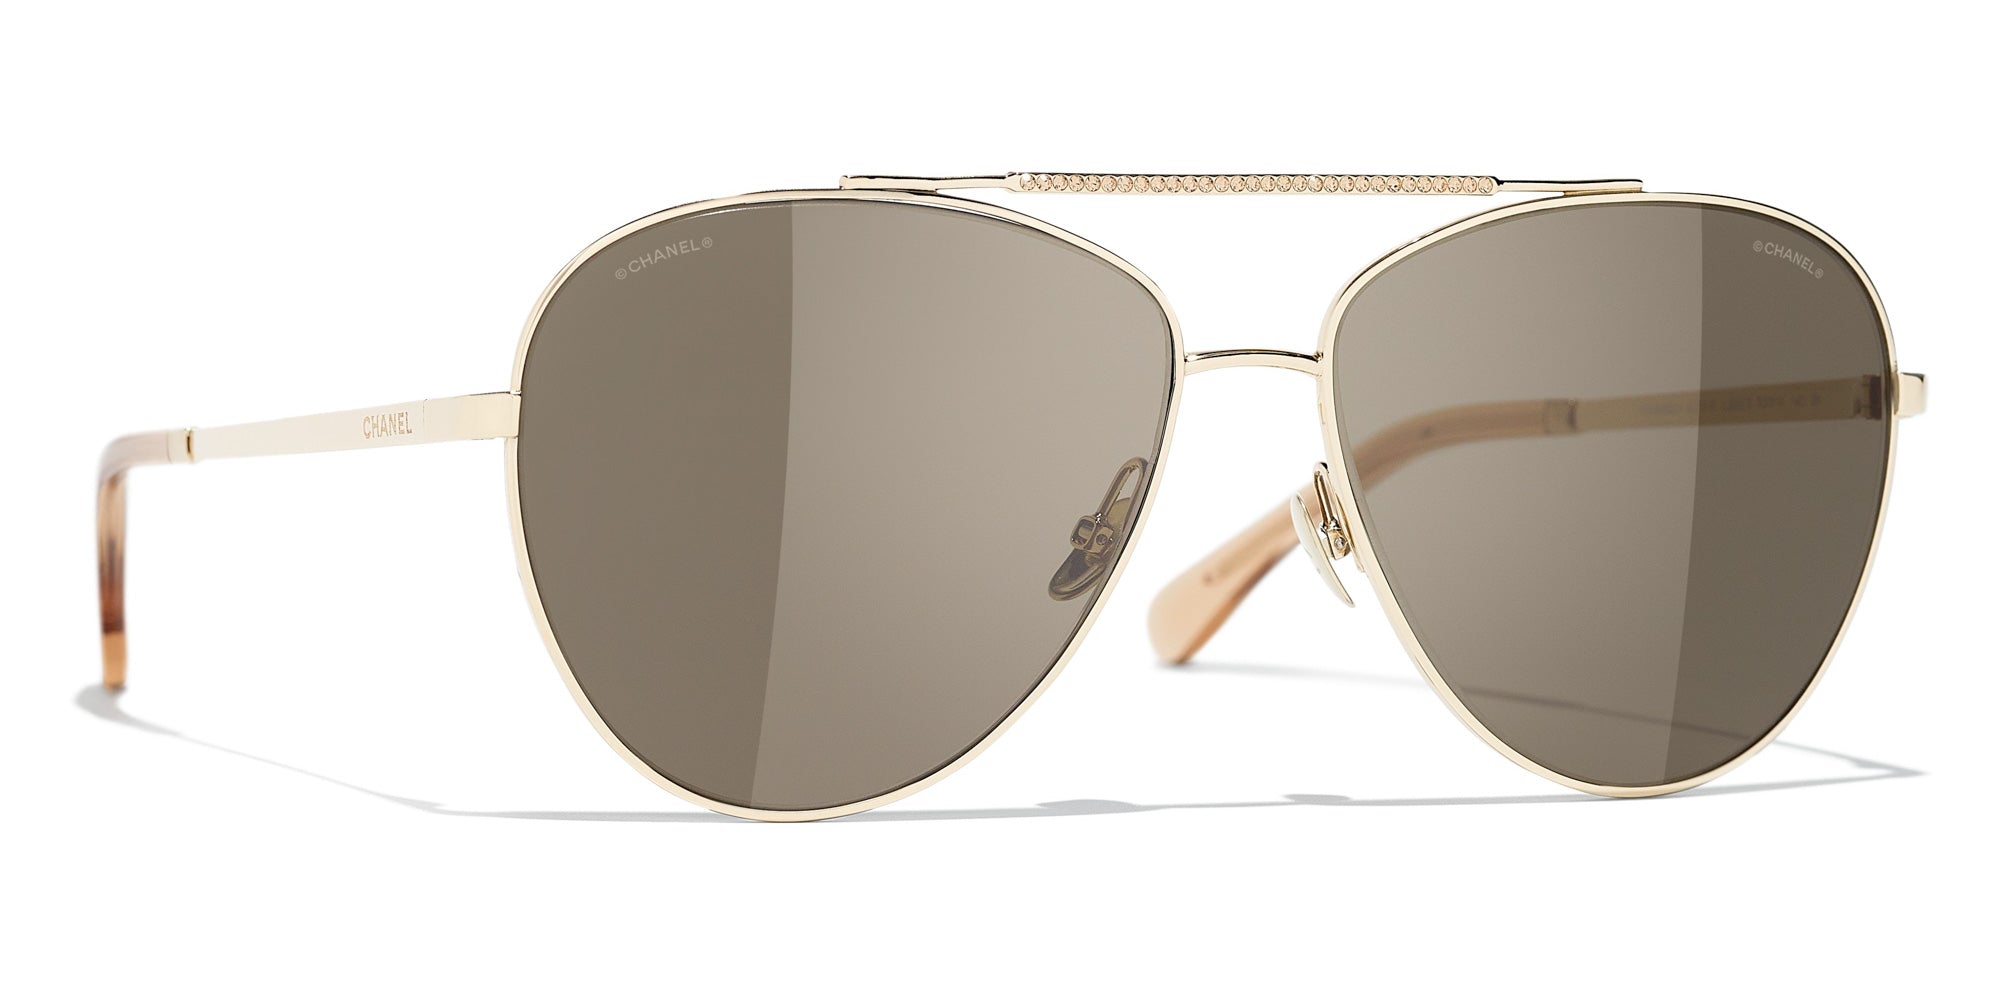 Chanel 4279B Sunglasses Gold/Brown Aviator Women